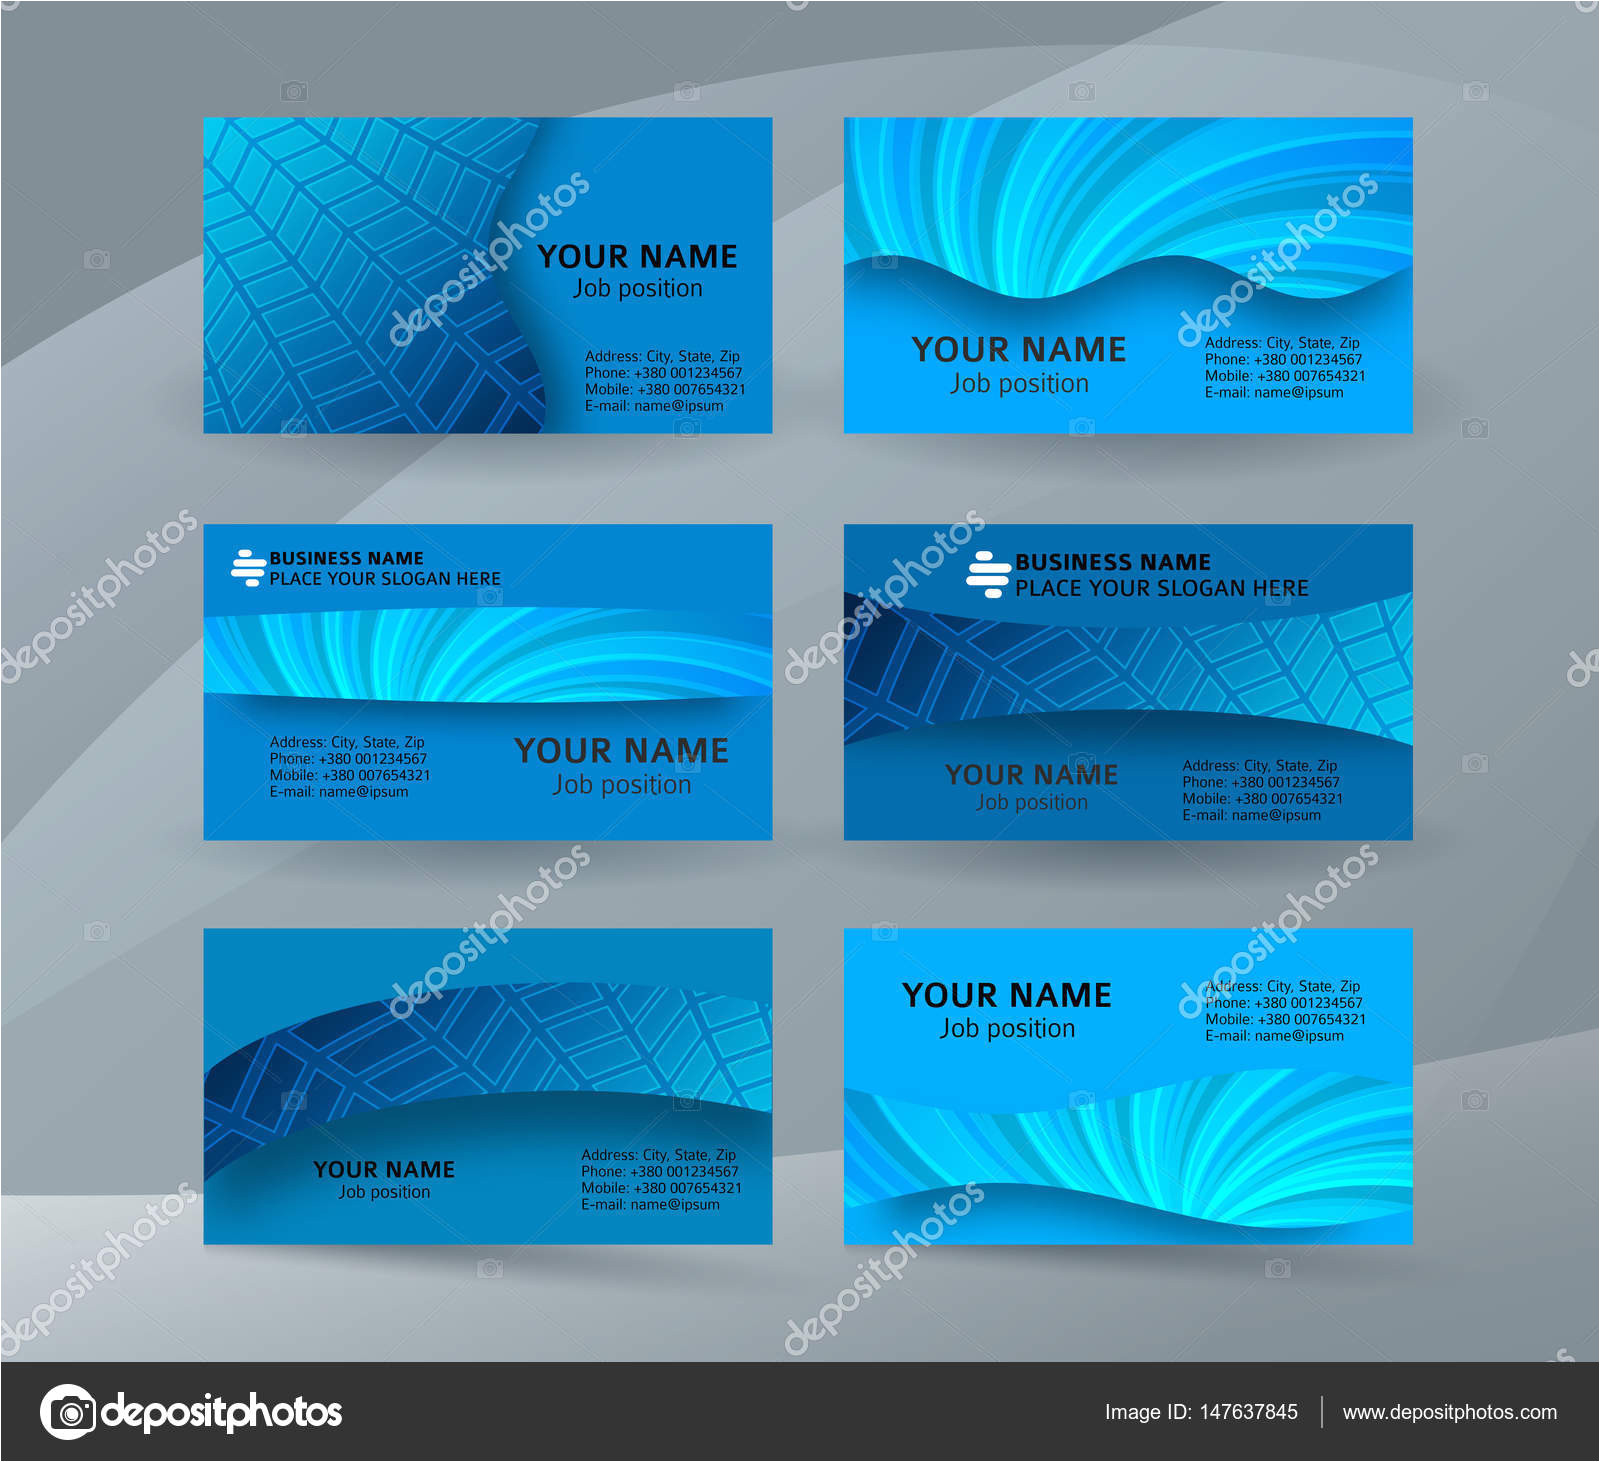 depositphotos 147637845 stock illustration business card background blue set jpg